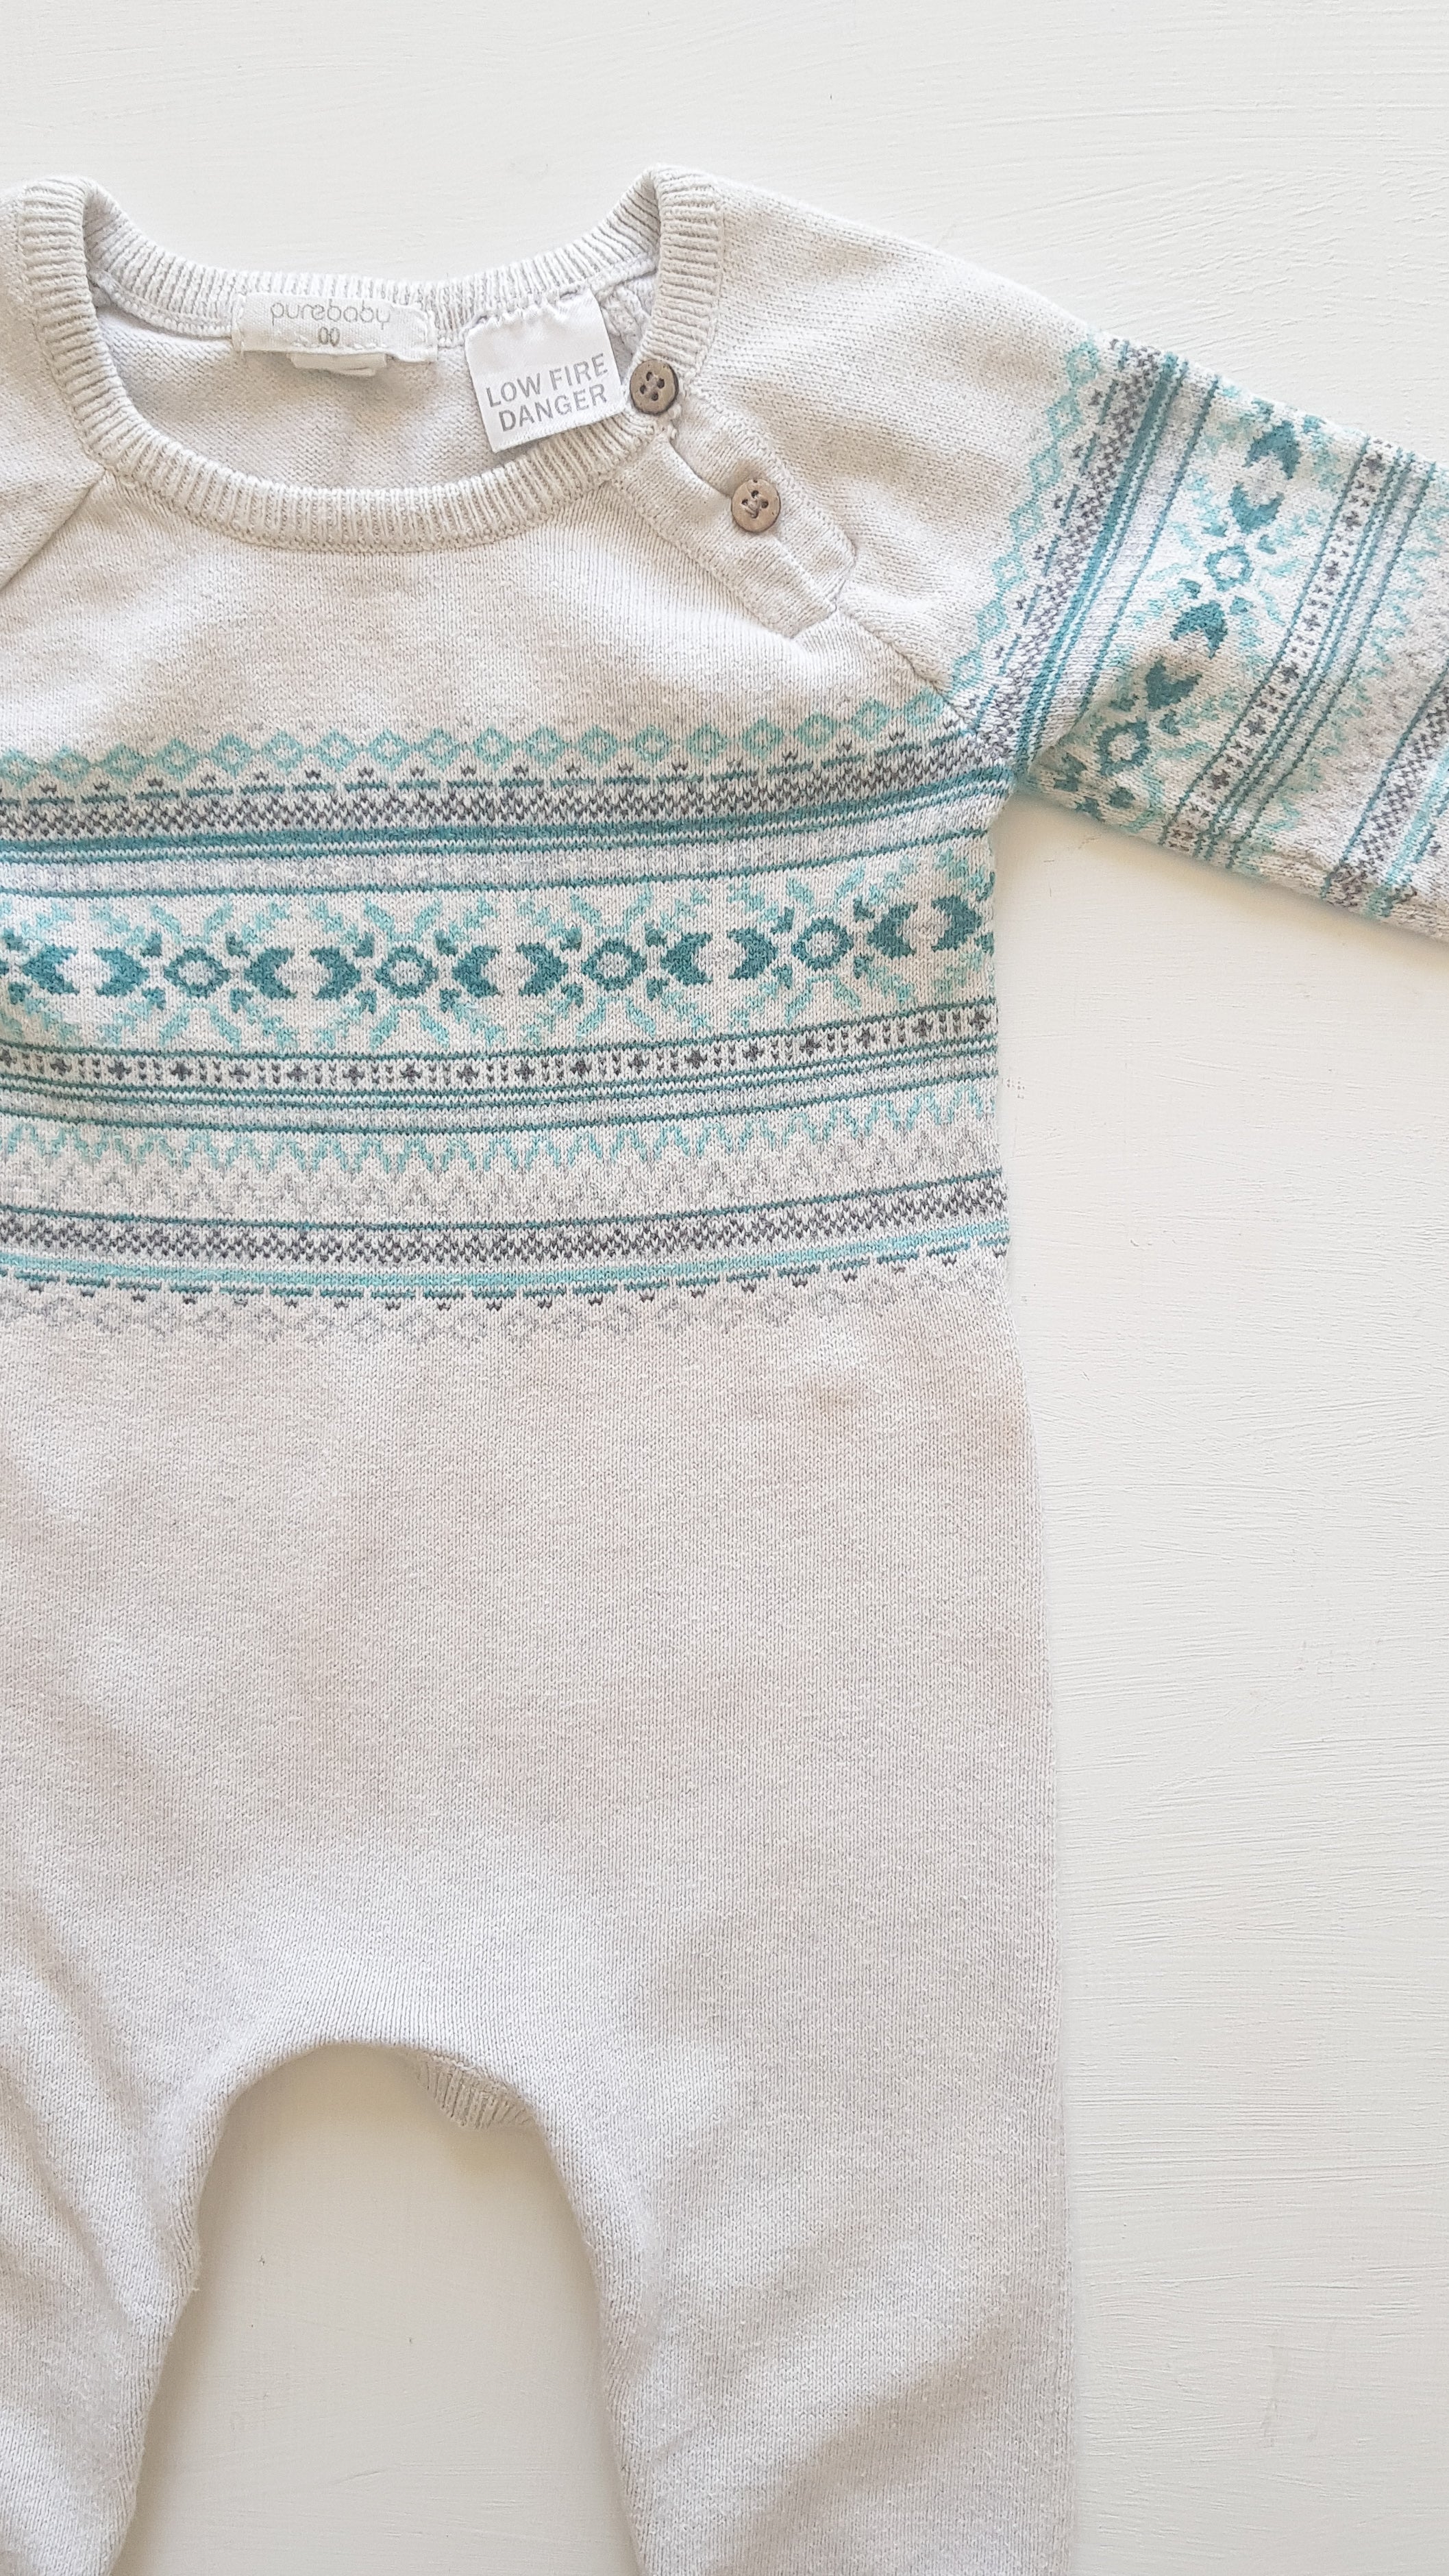 THRIFT Purebaby - Winter Knitted Set Size 00